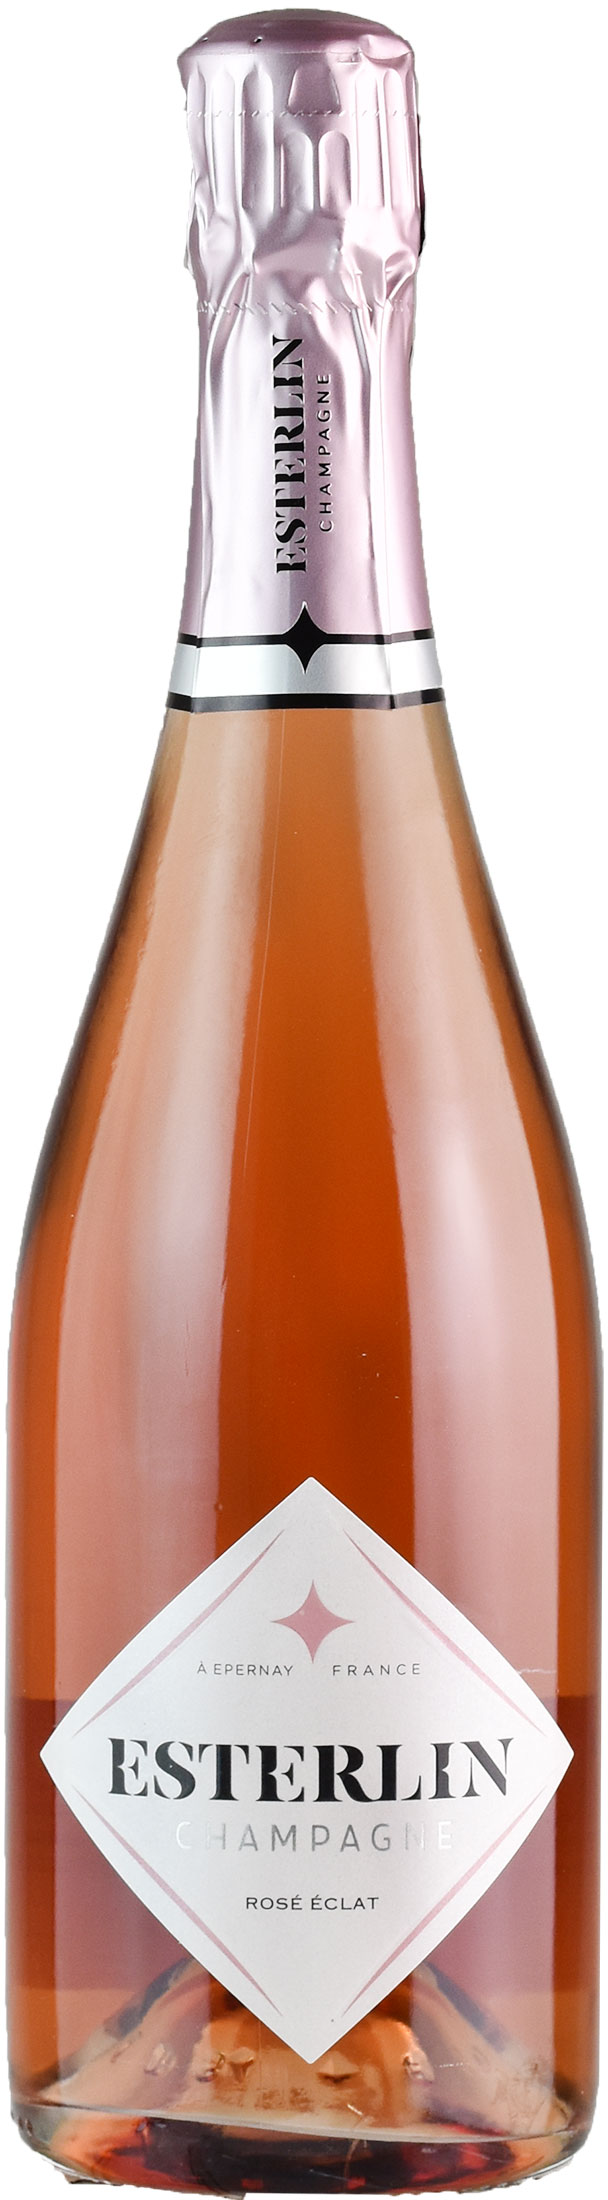 Esterlin Champagne Rosé Eclat Brut